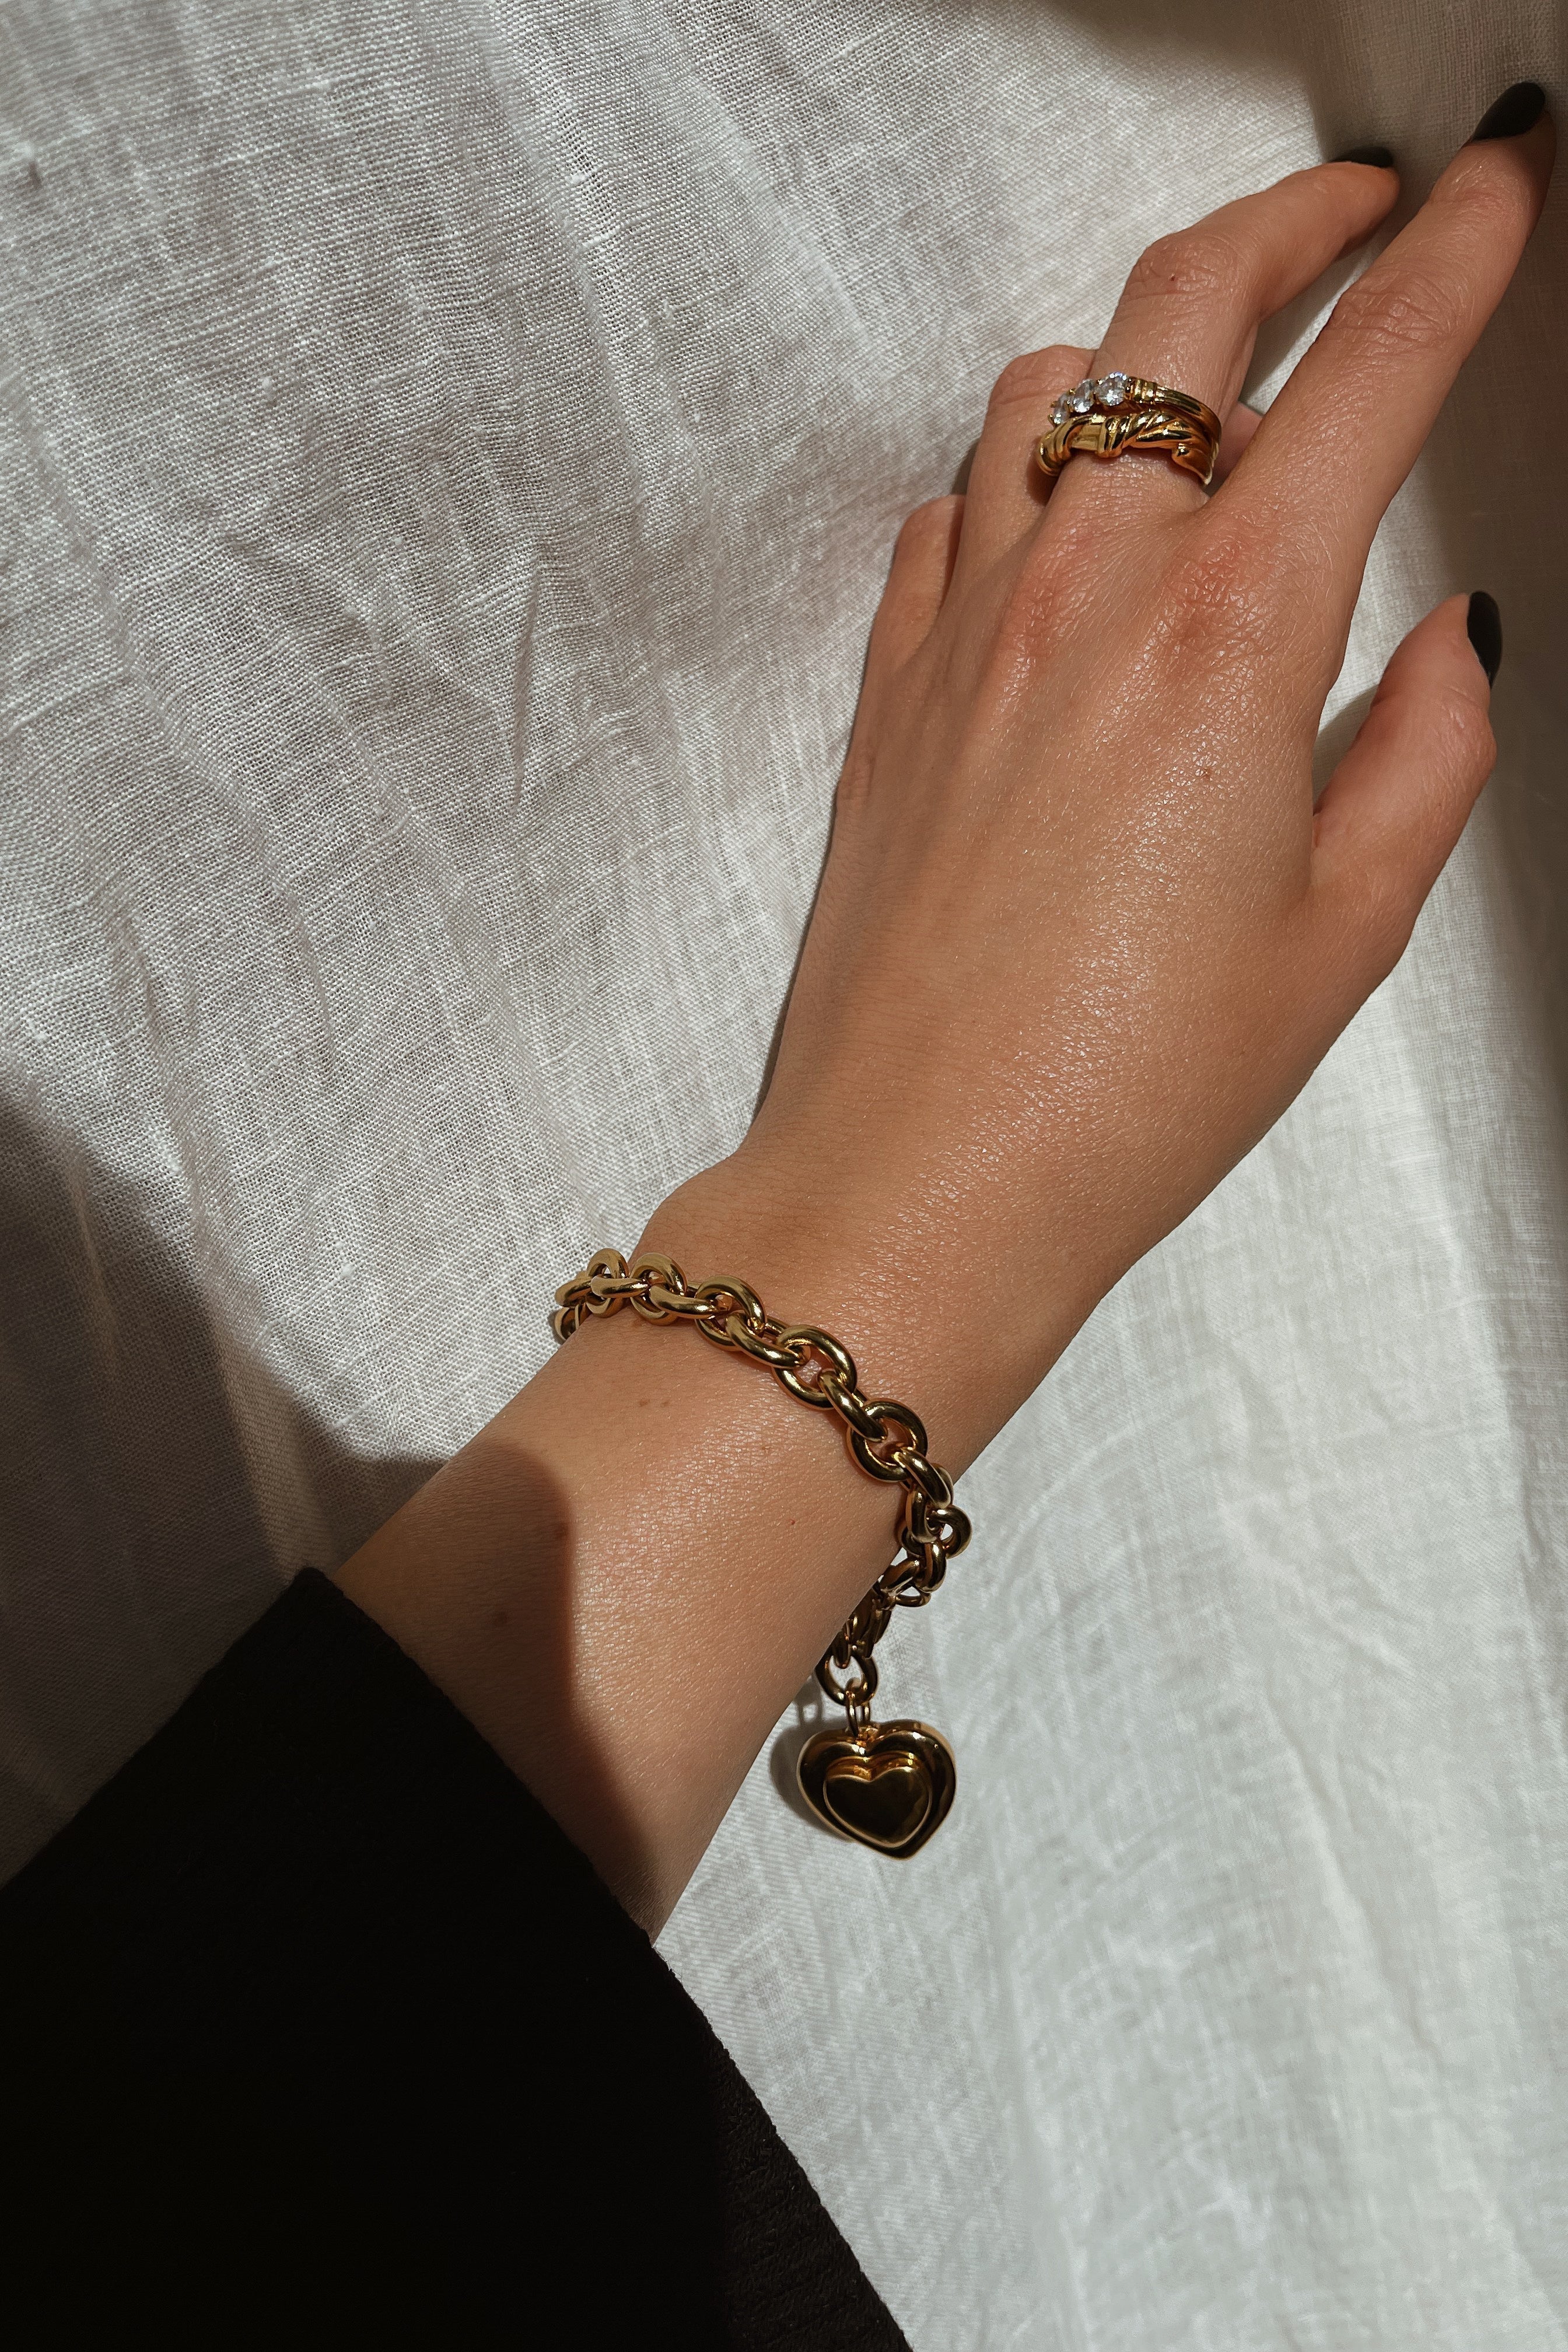 Jasmine Bracelet - Boutique Minimaliste has waterproof, durable, elegant and vintage inspired jewelry